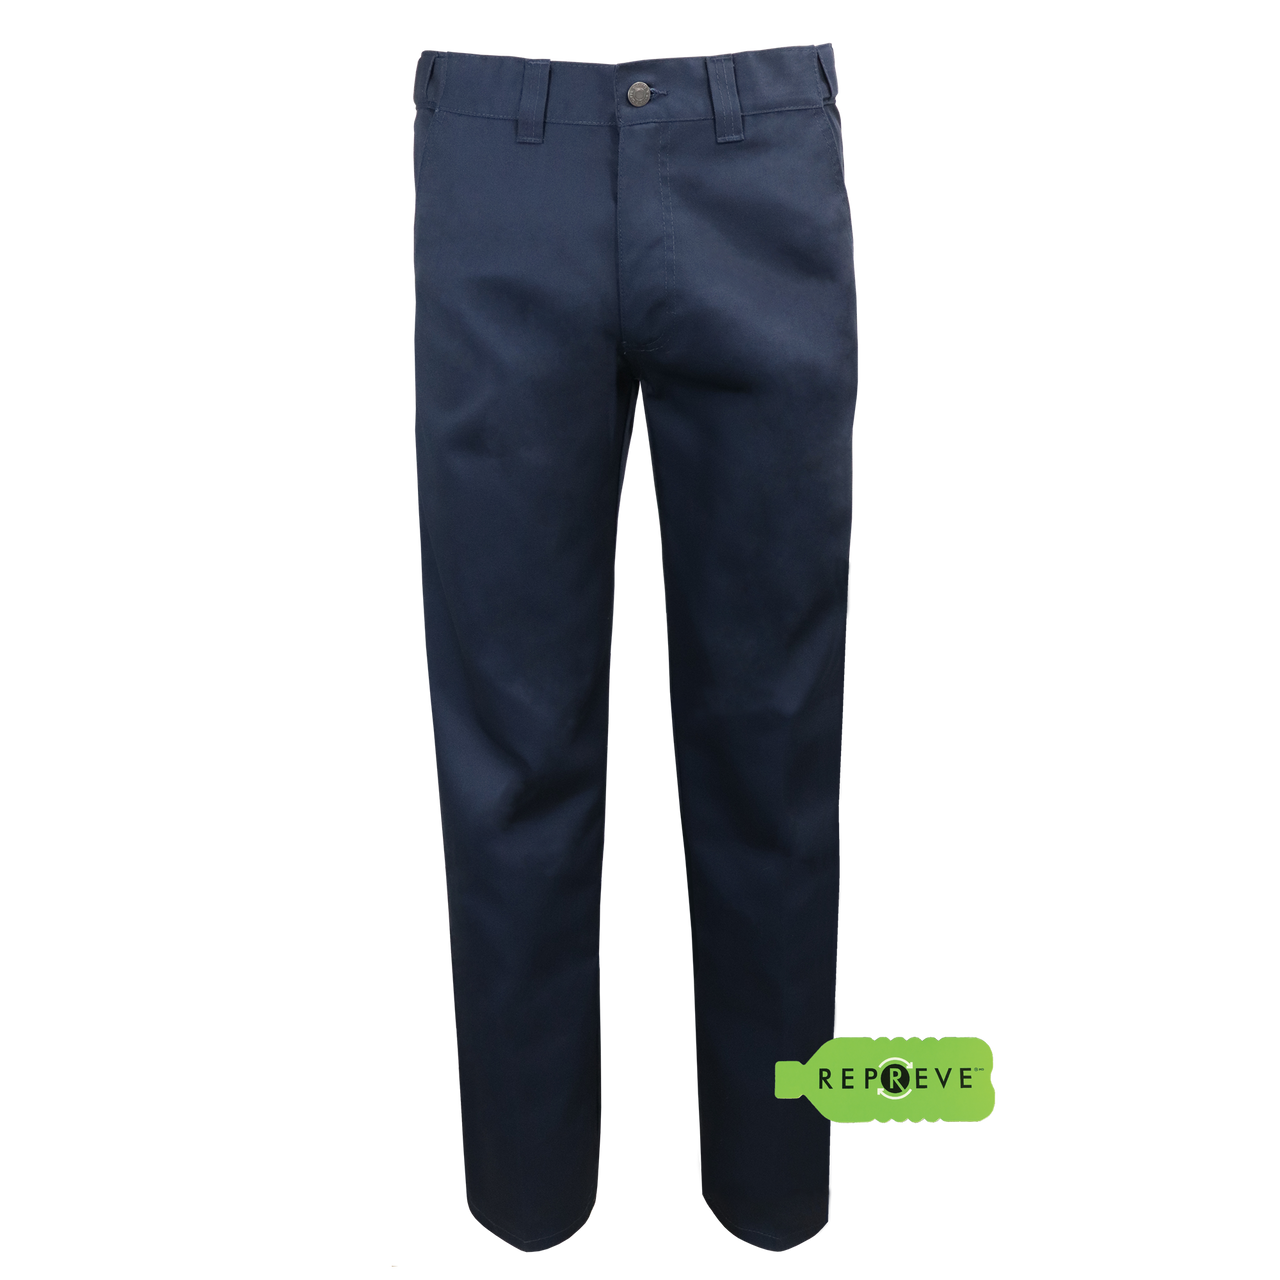 MRB-777ECO - Pantalon de travail (taille flexible)||MRB-777ECO - Workwear pant (flexible waist)